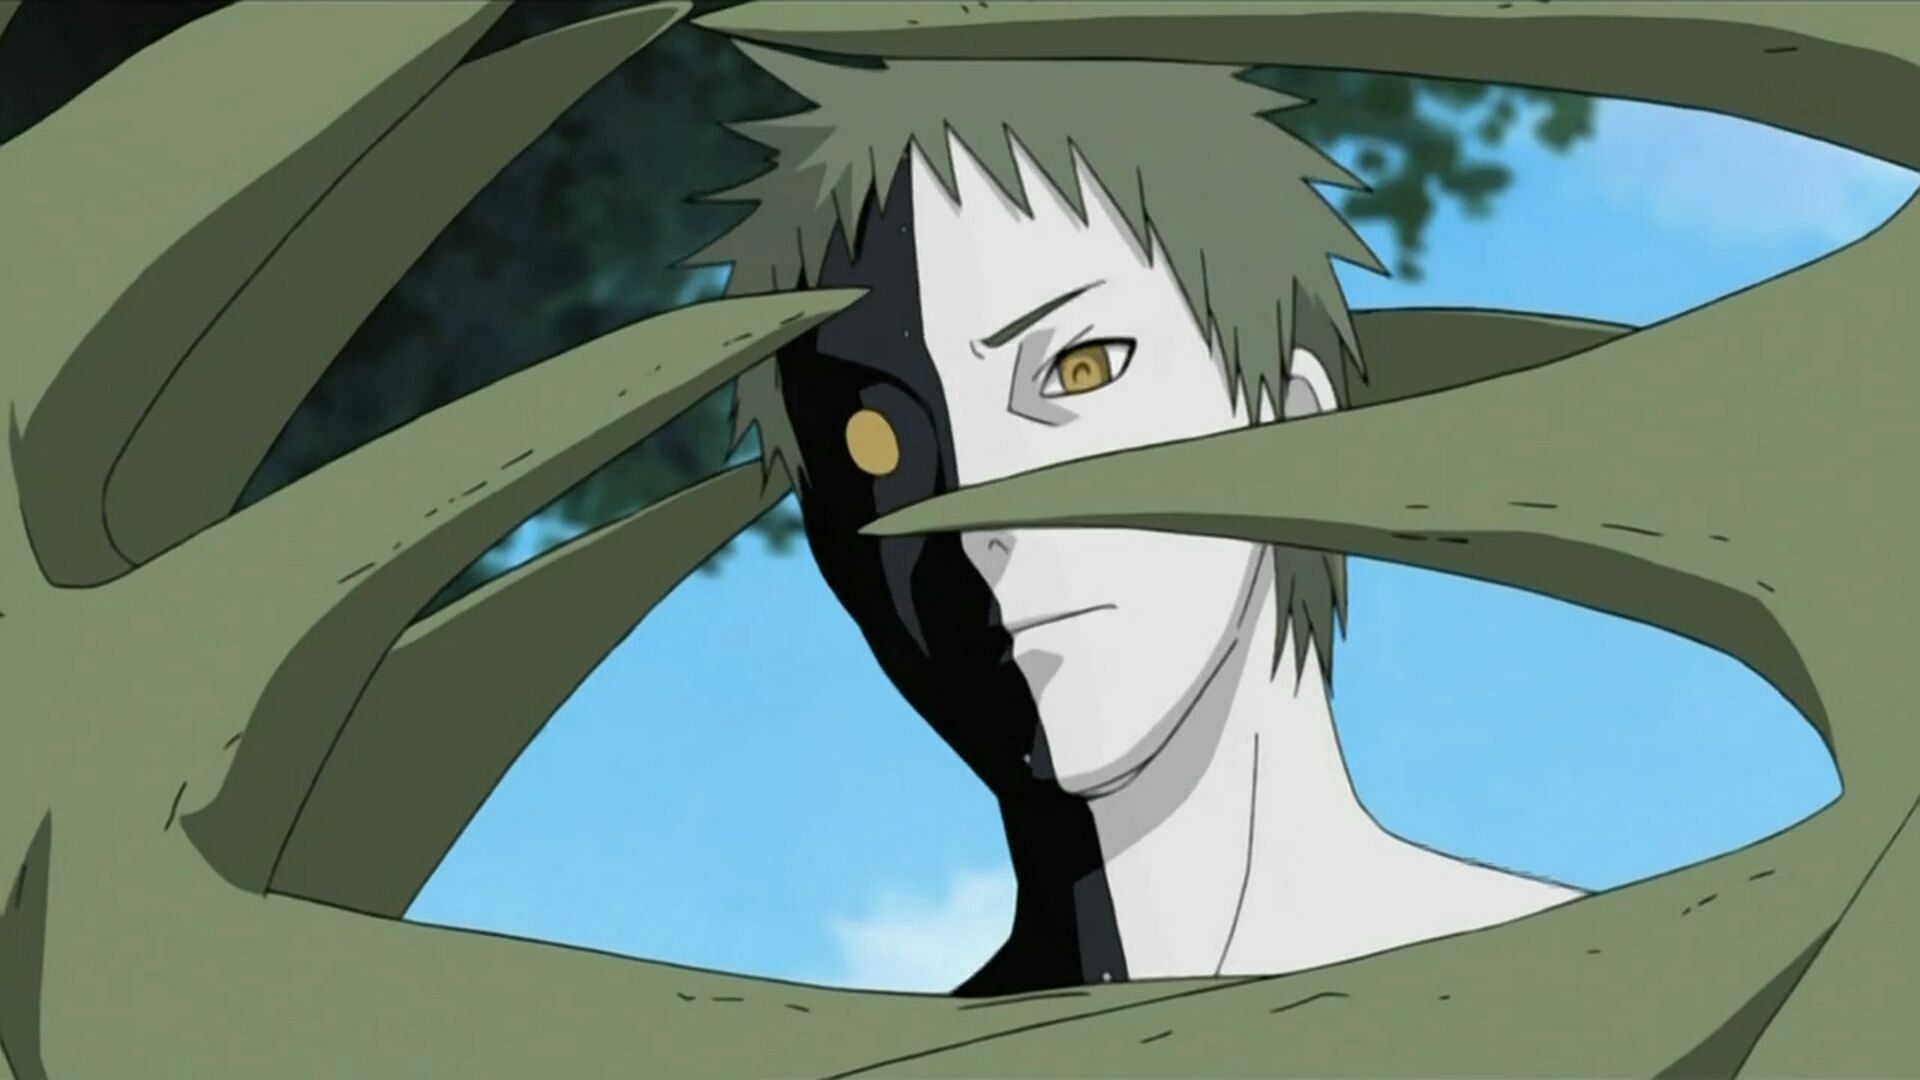 Zetsu from the Naruto series (image via Pierrot)